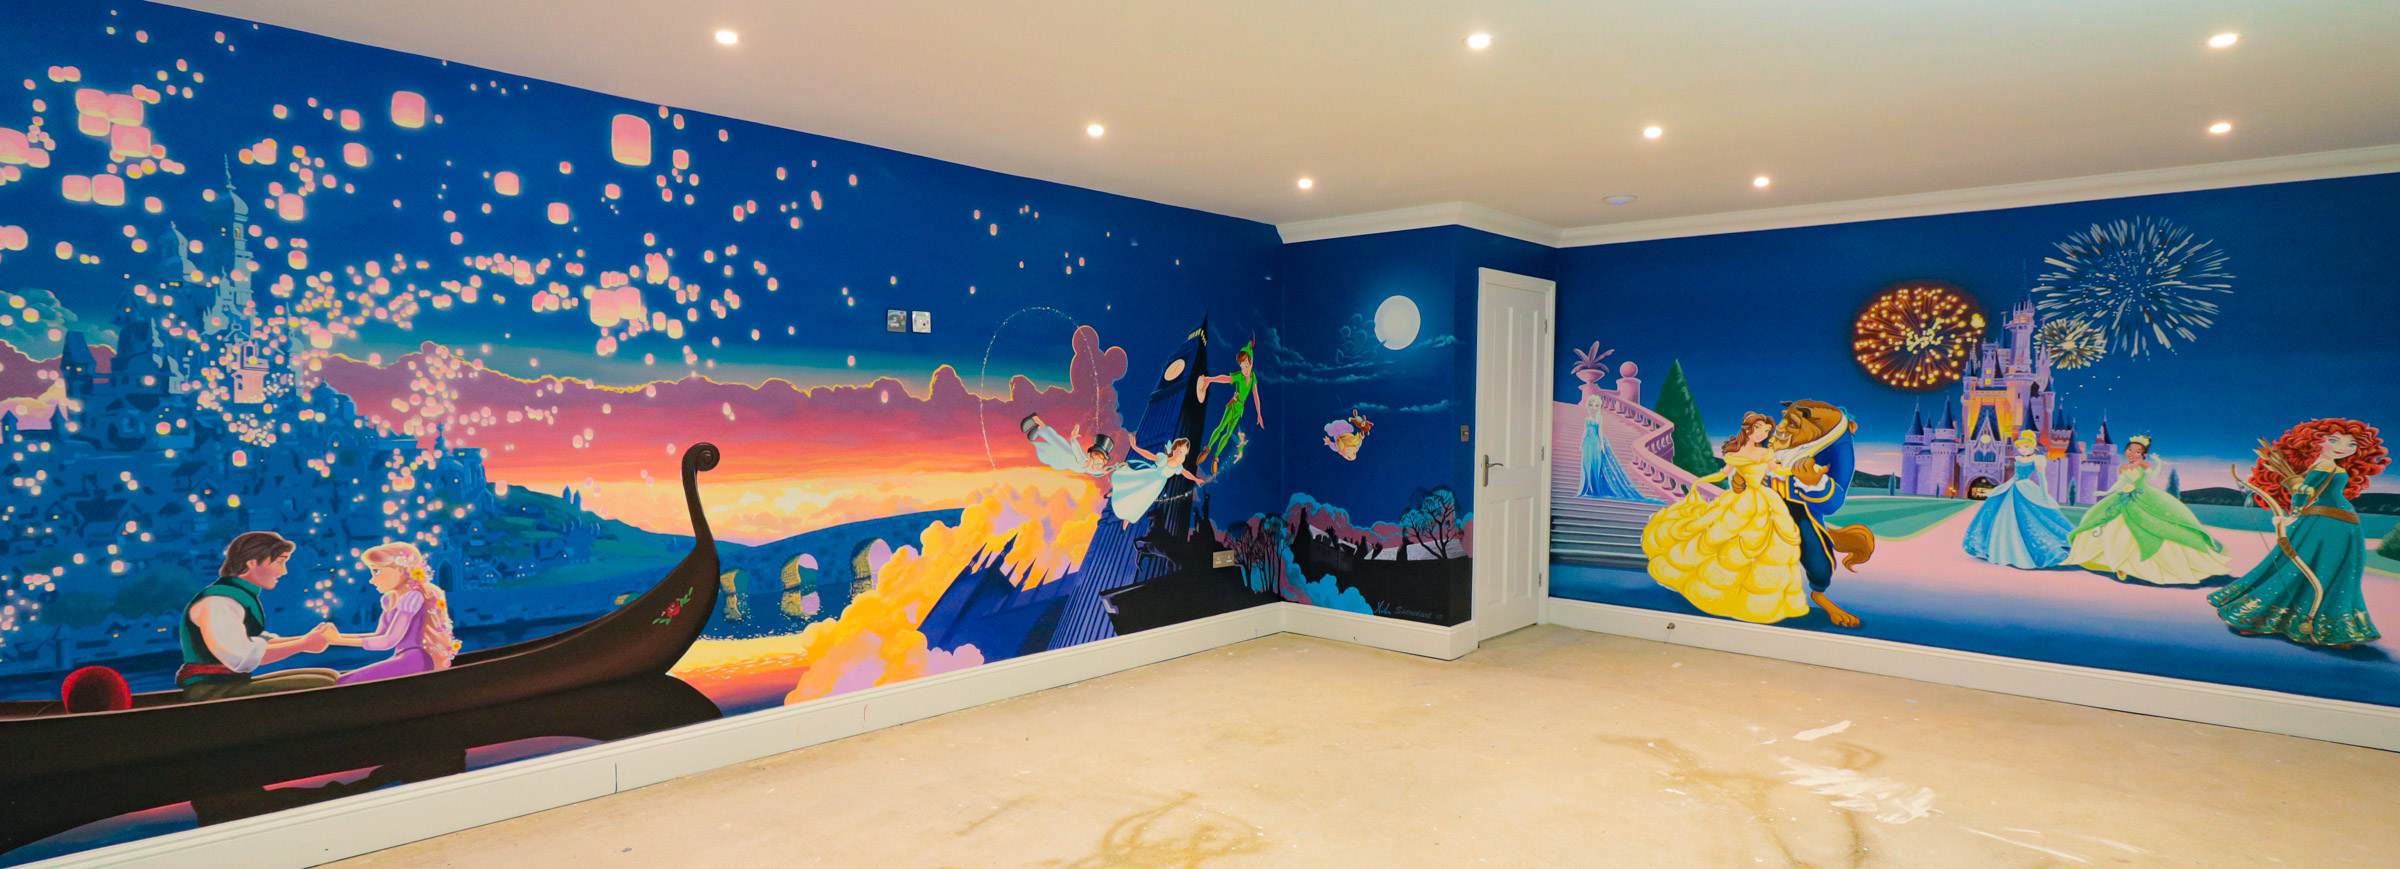 Disney Twilight playroom mural in Hungerford, Berkshire